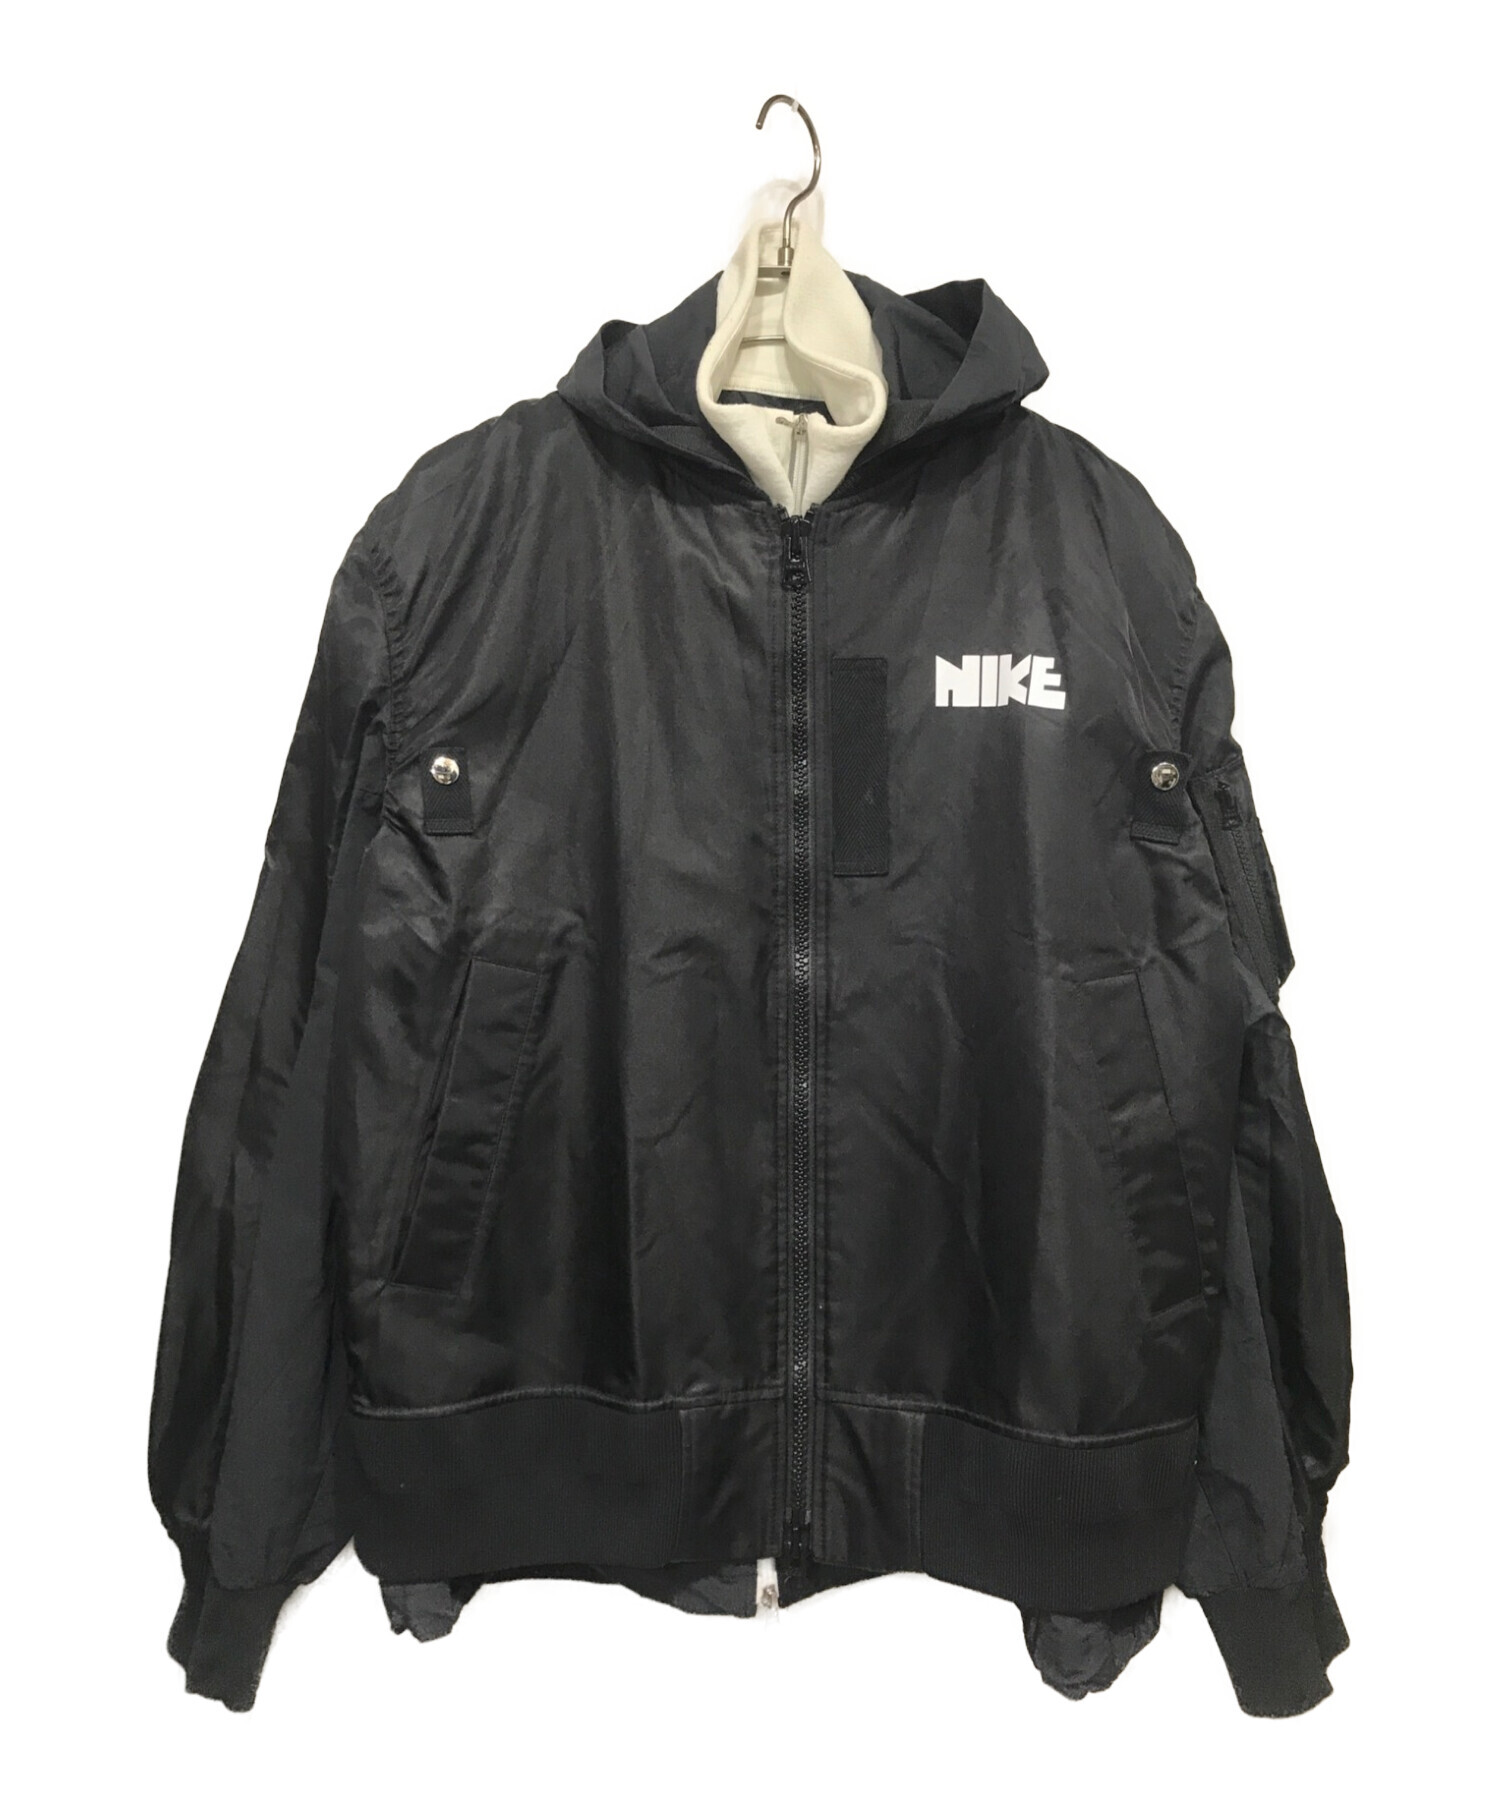 sacai (サカイ) NIKE (ナイキ) NRG LAYERED JKT ブラック サイズ:XL